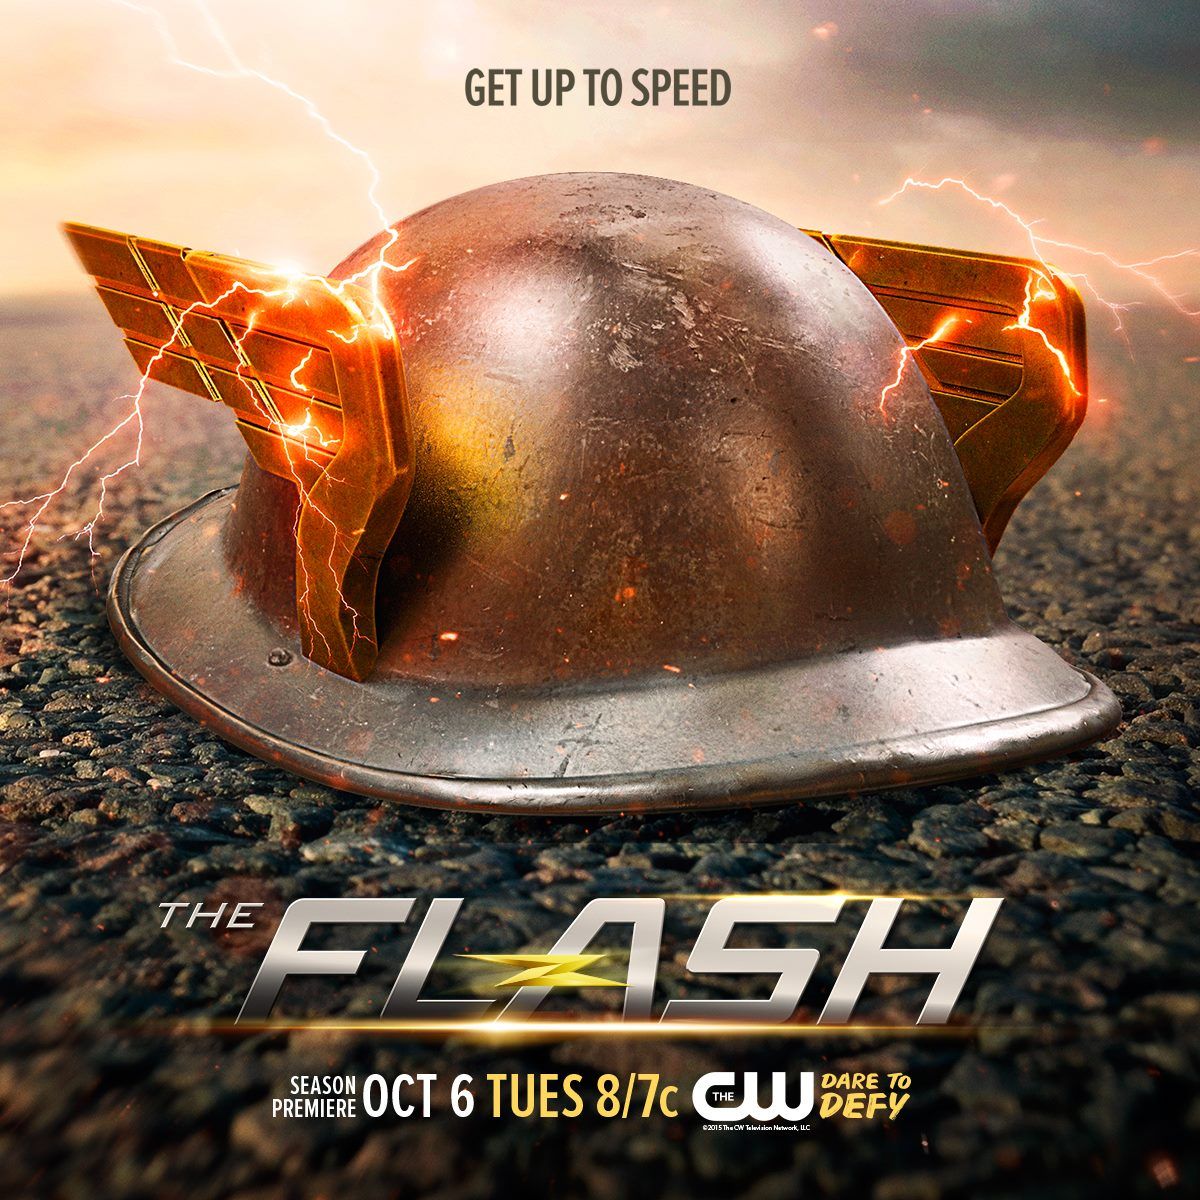 The Flash Season 2 Poster